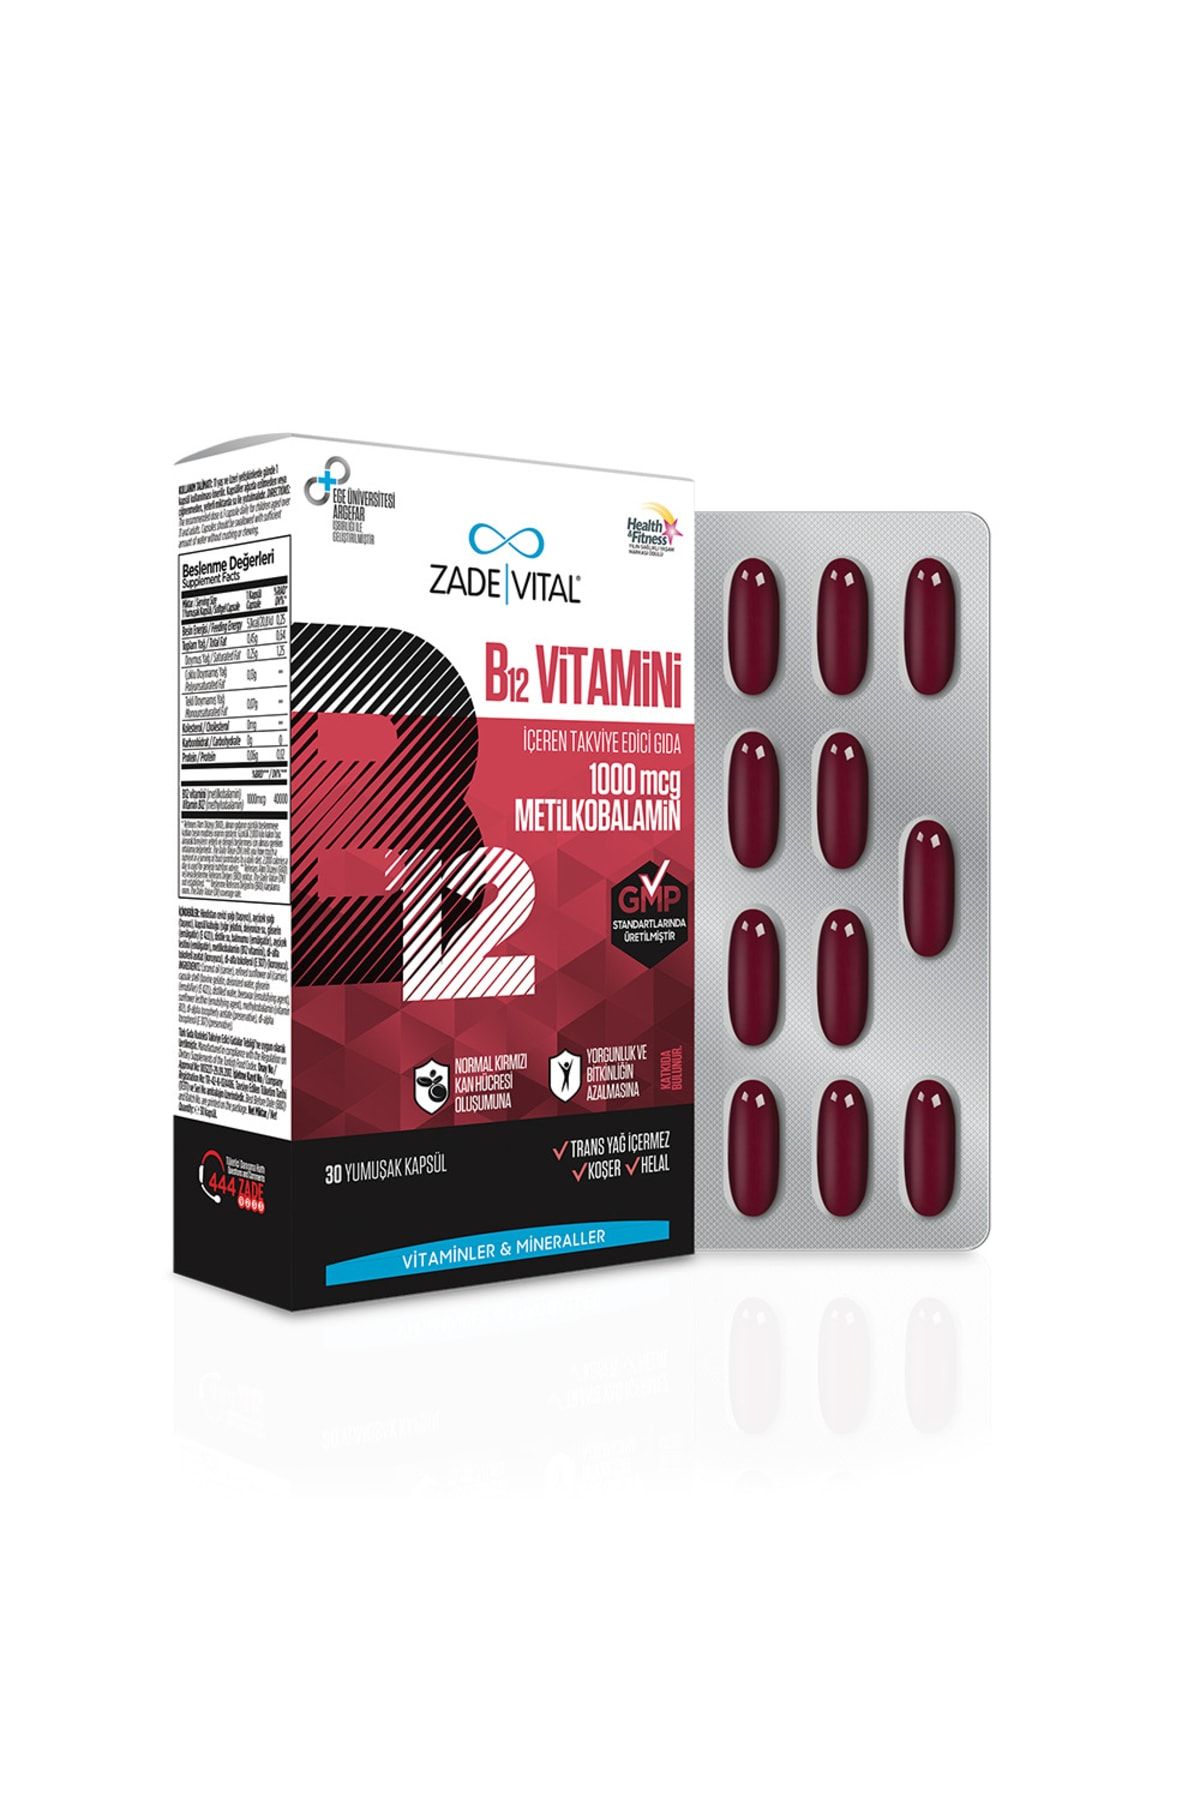 Zade Vital B12 Vitamini B12 Vitamini Içeren Takviye Edici Gıda (1 Kutu 30 Kapsül)